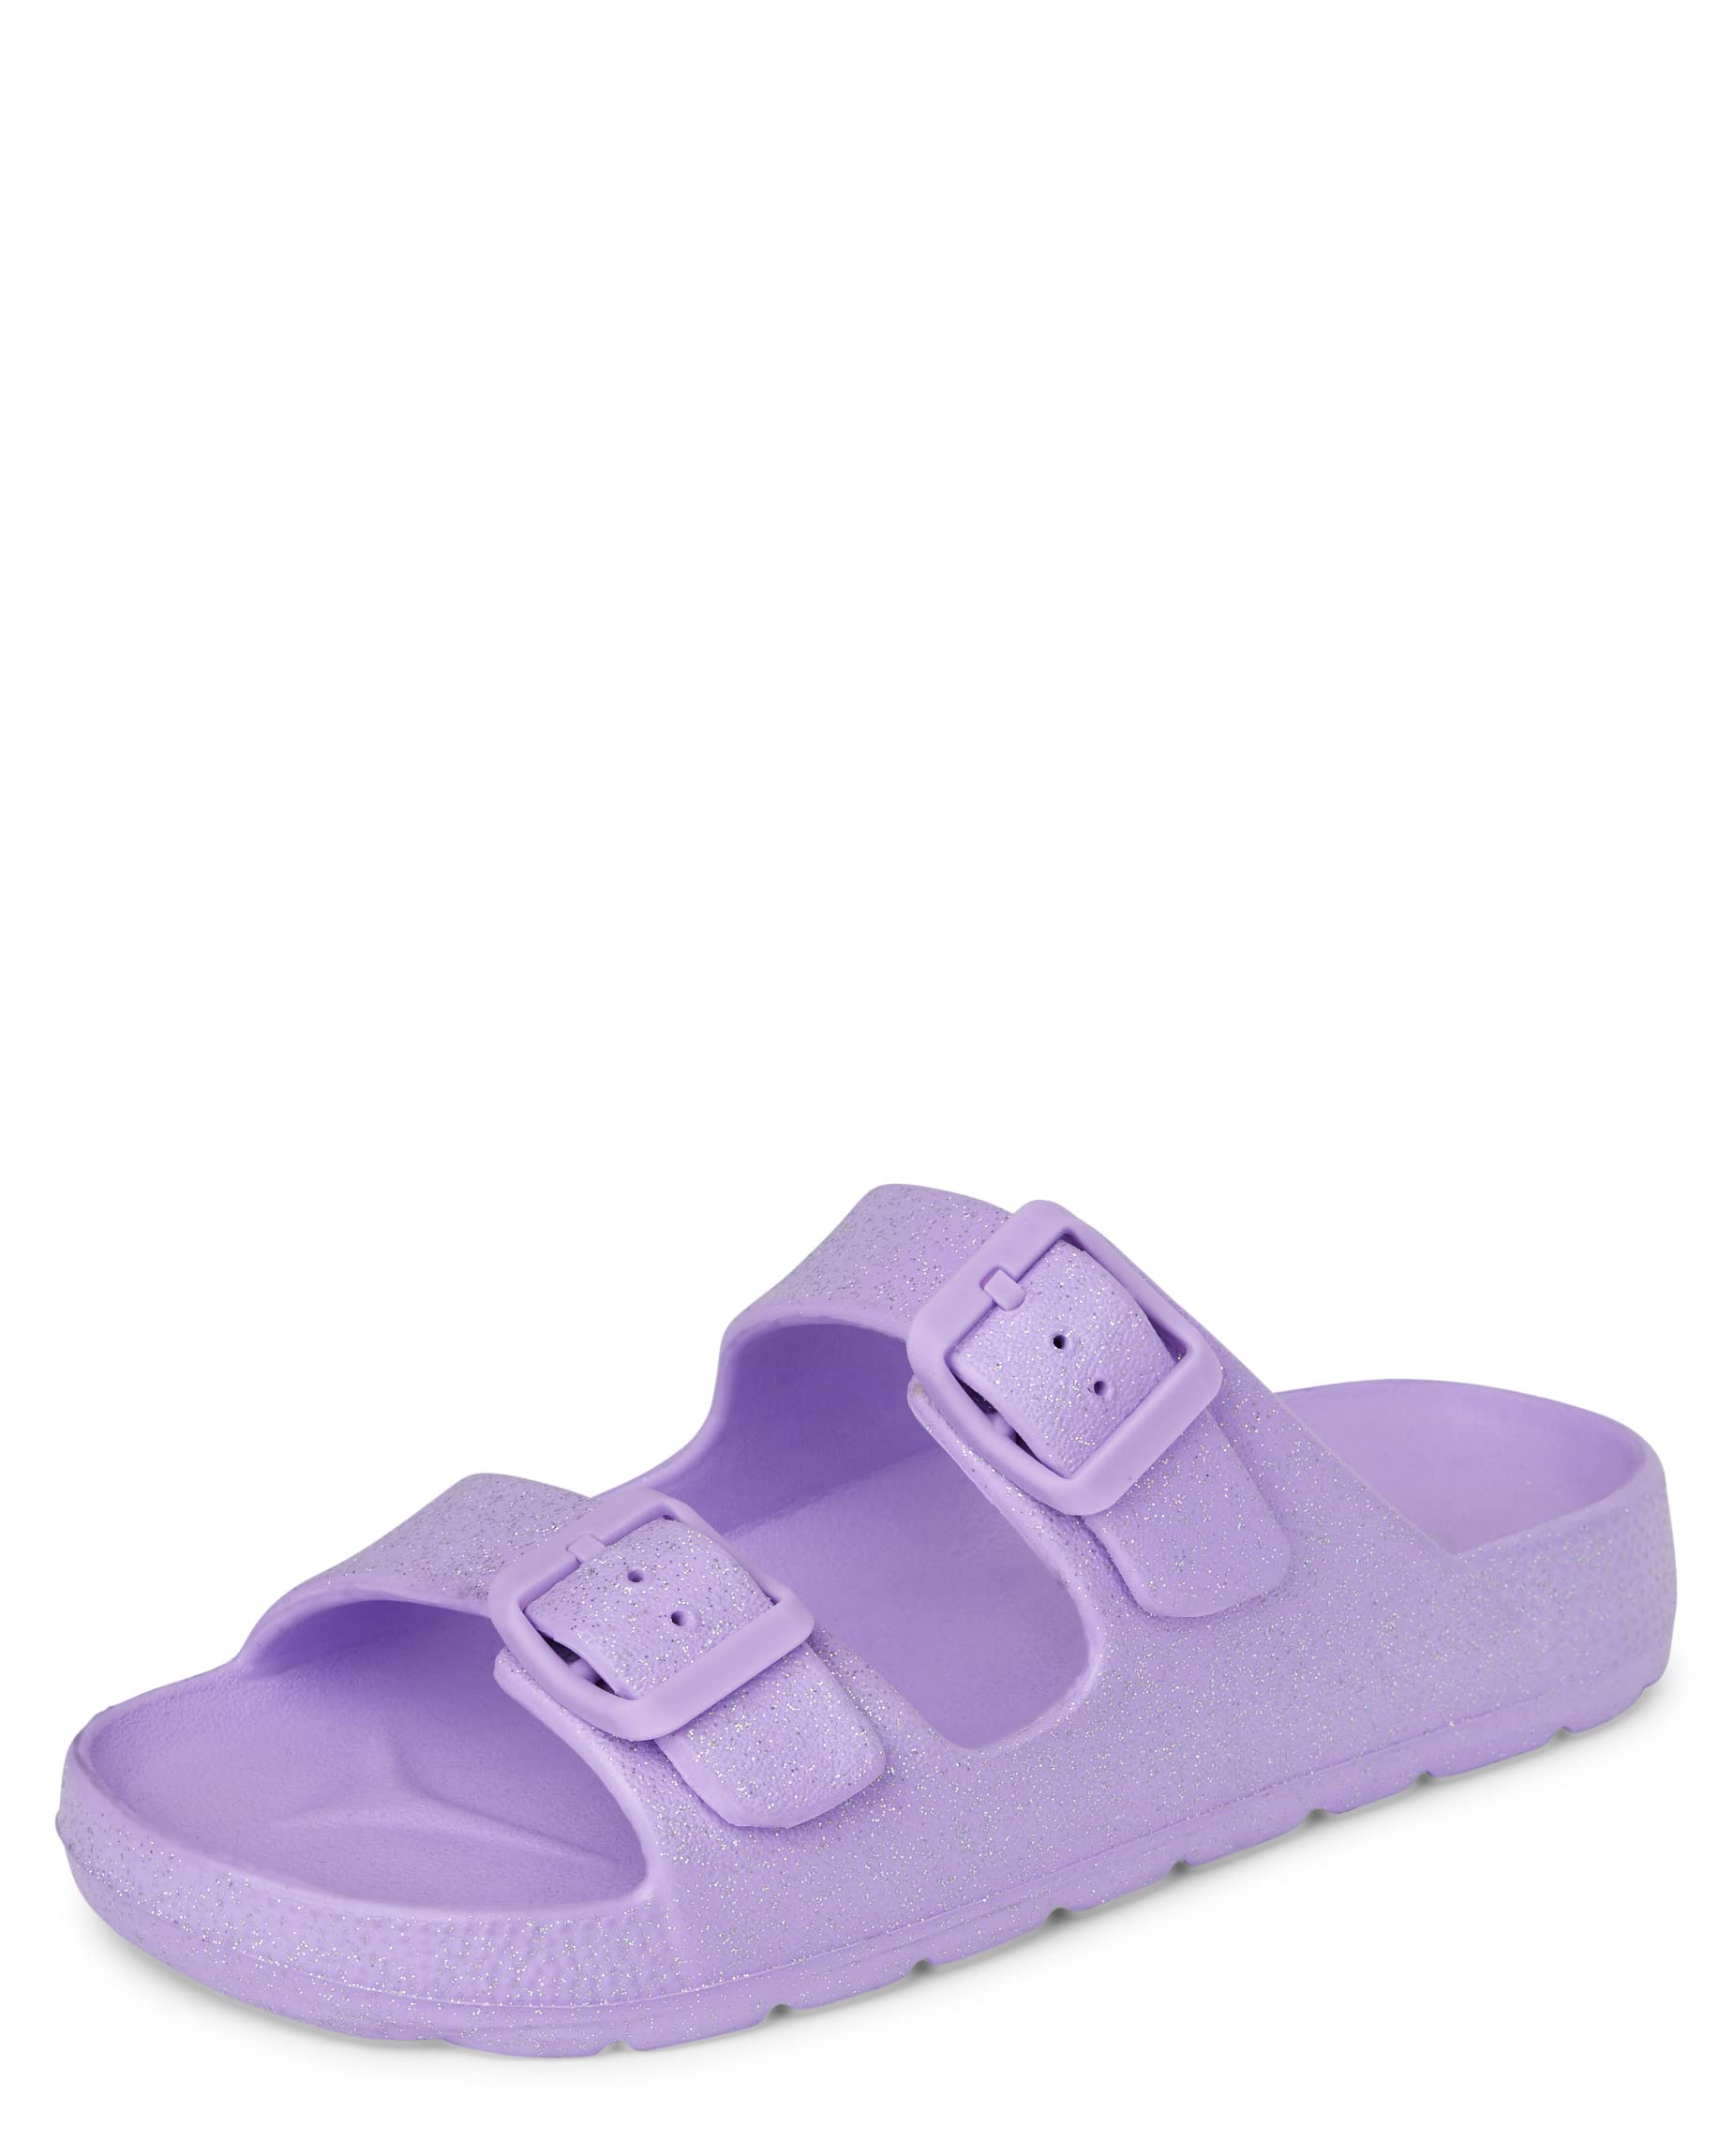 The Children's Place Girl's Double Buckle Slip on Slide Sandals